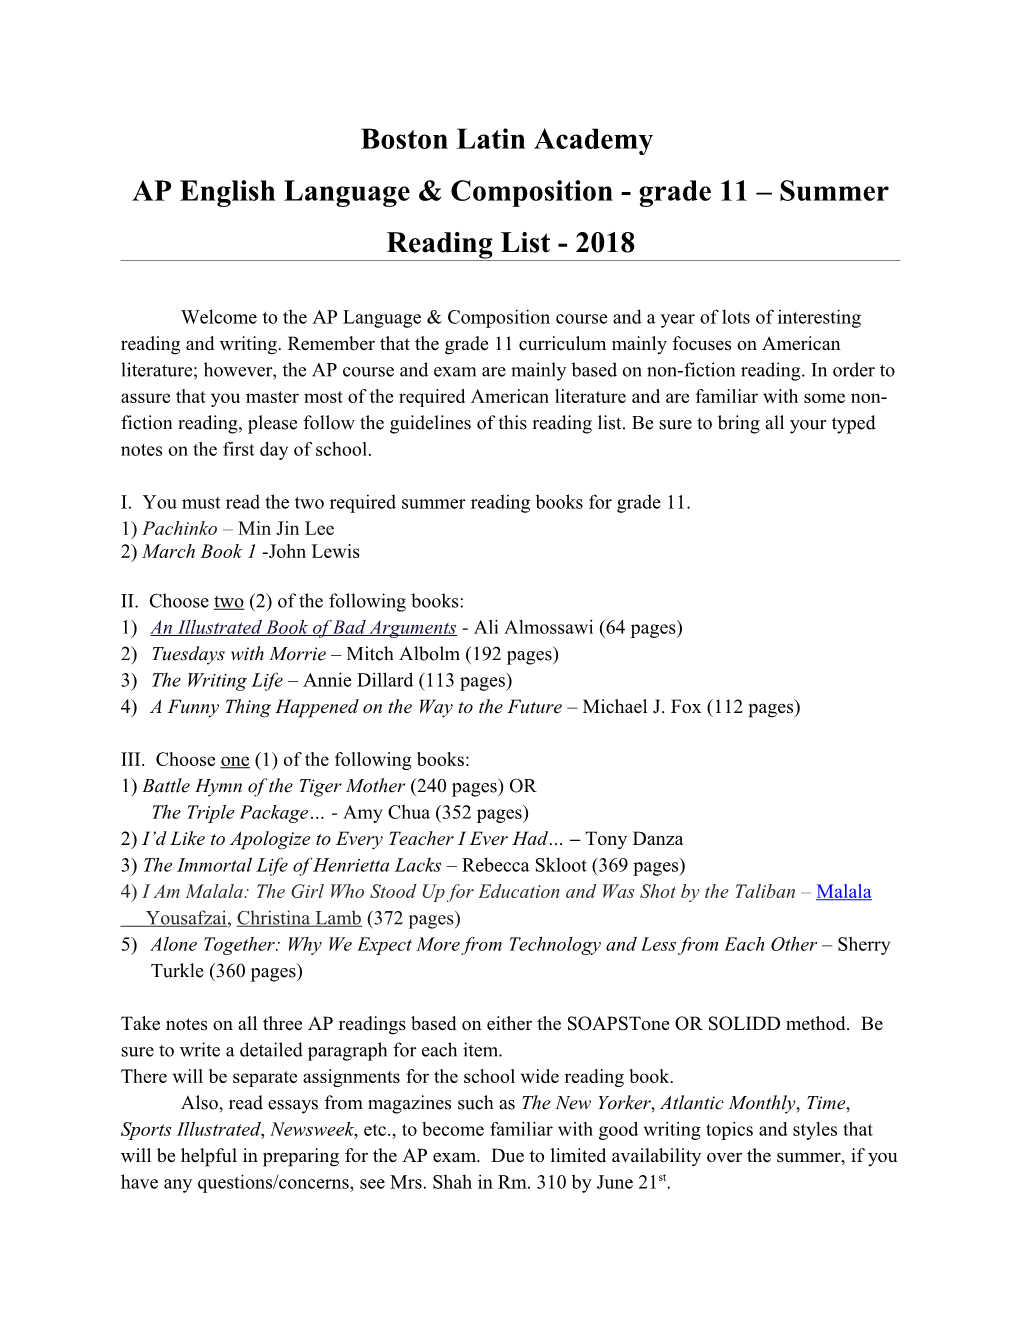 AP English Language & Composition - Grade 11 Summer Reading List- 2018